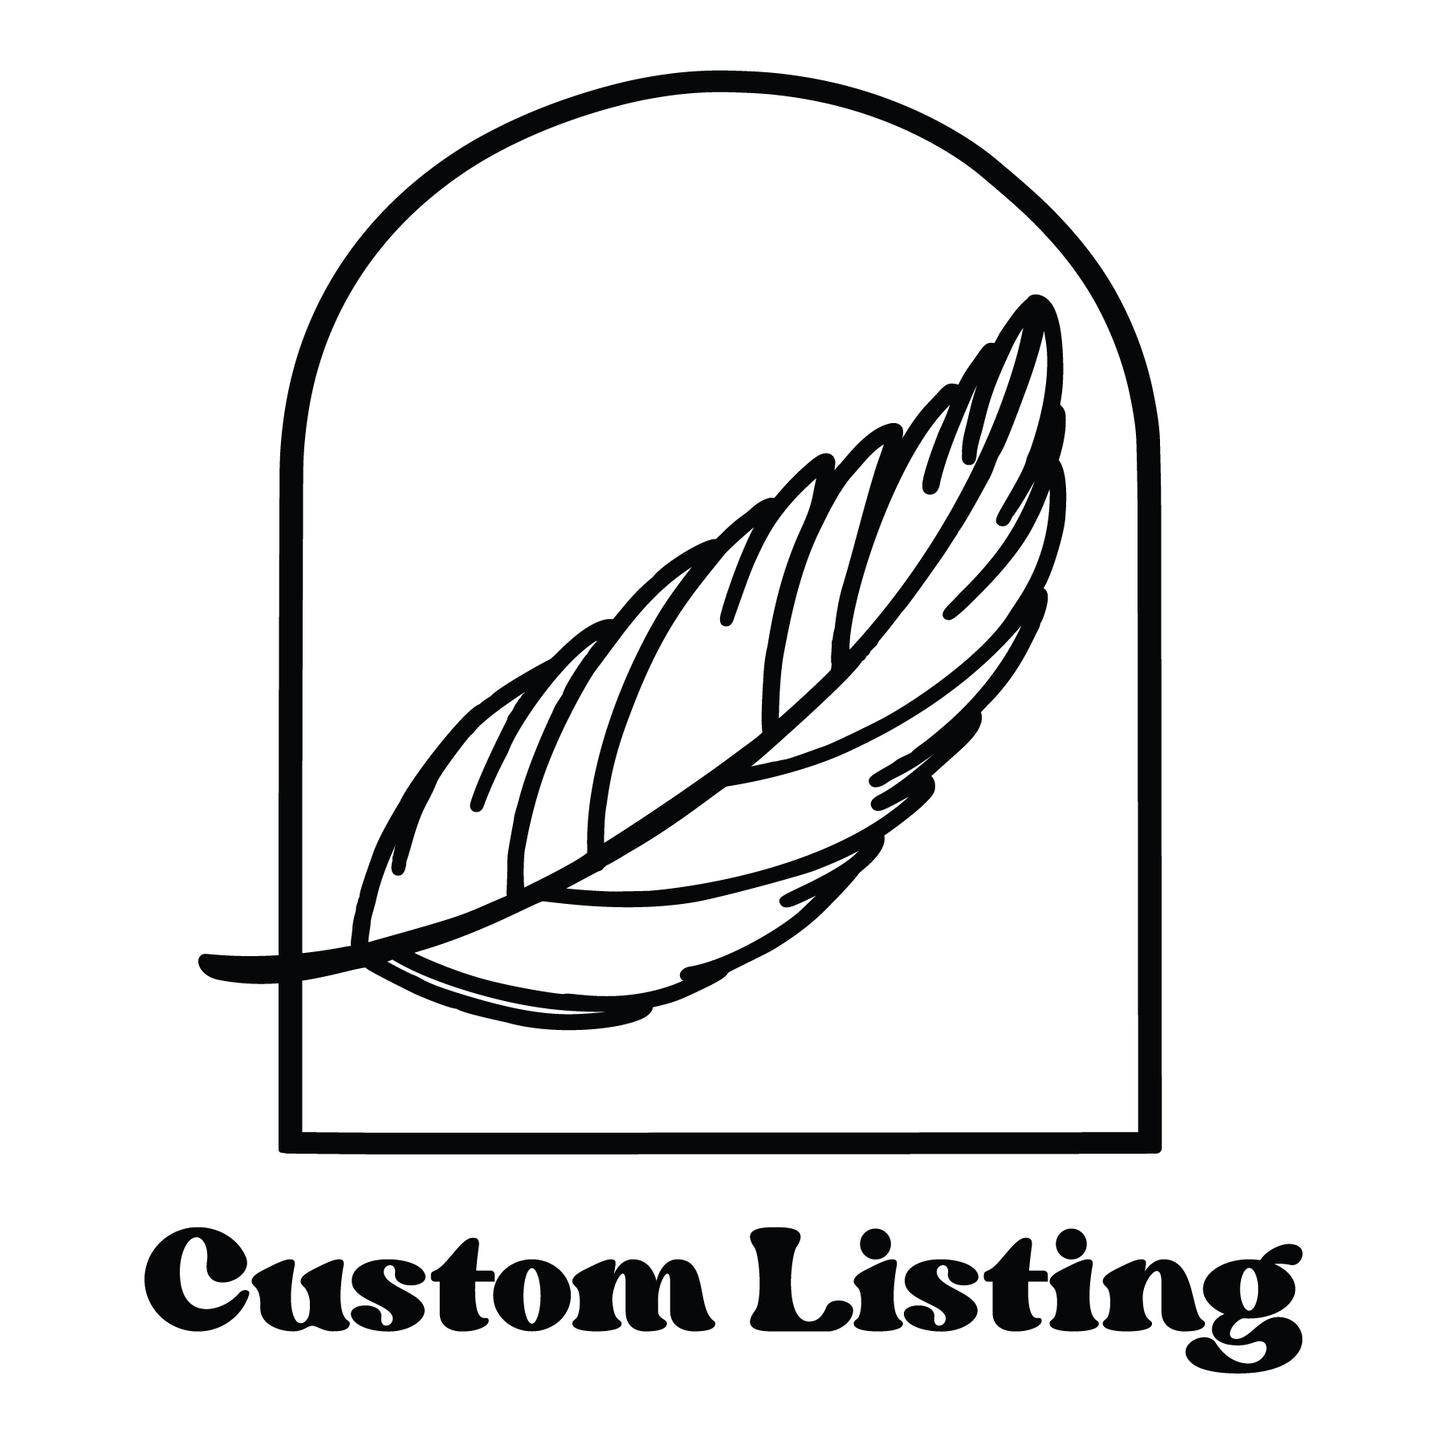 Custom Listing for Courtney